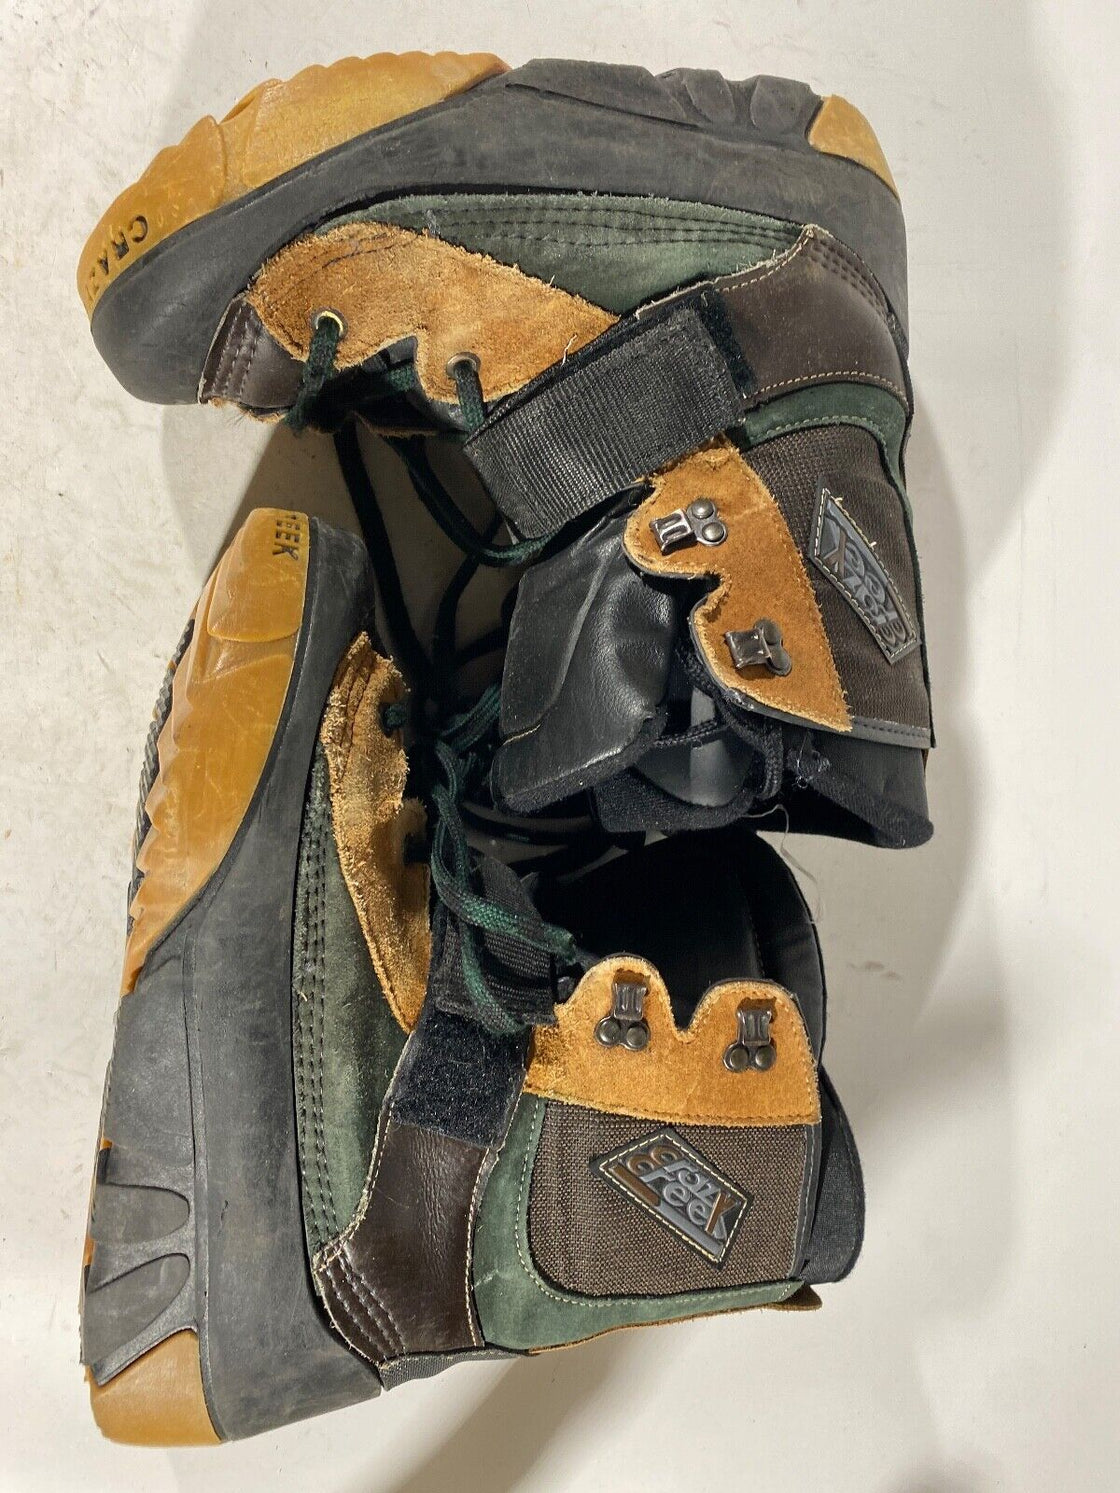 Crazy Creek Snowboard Vintage Boots Size EU43, US9.5, UK8, Mondo 275 mm